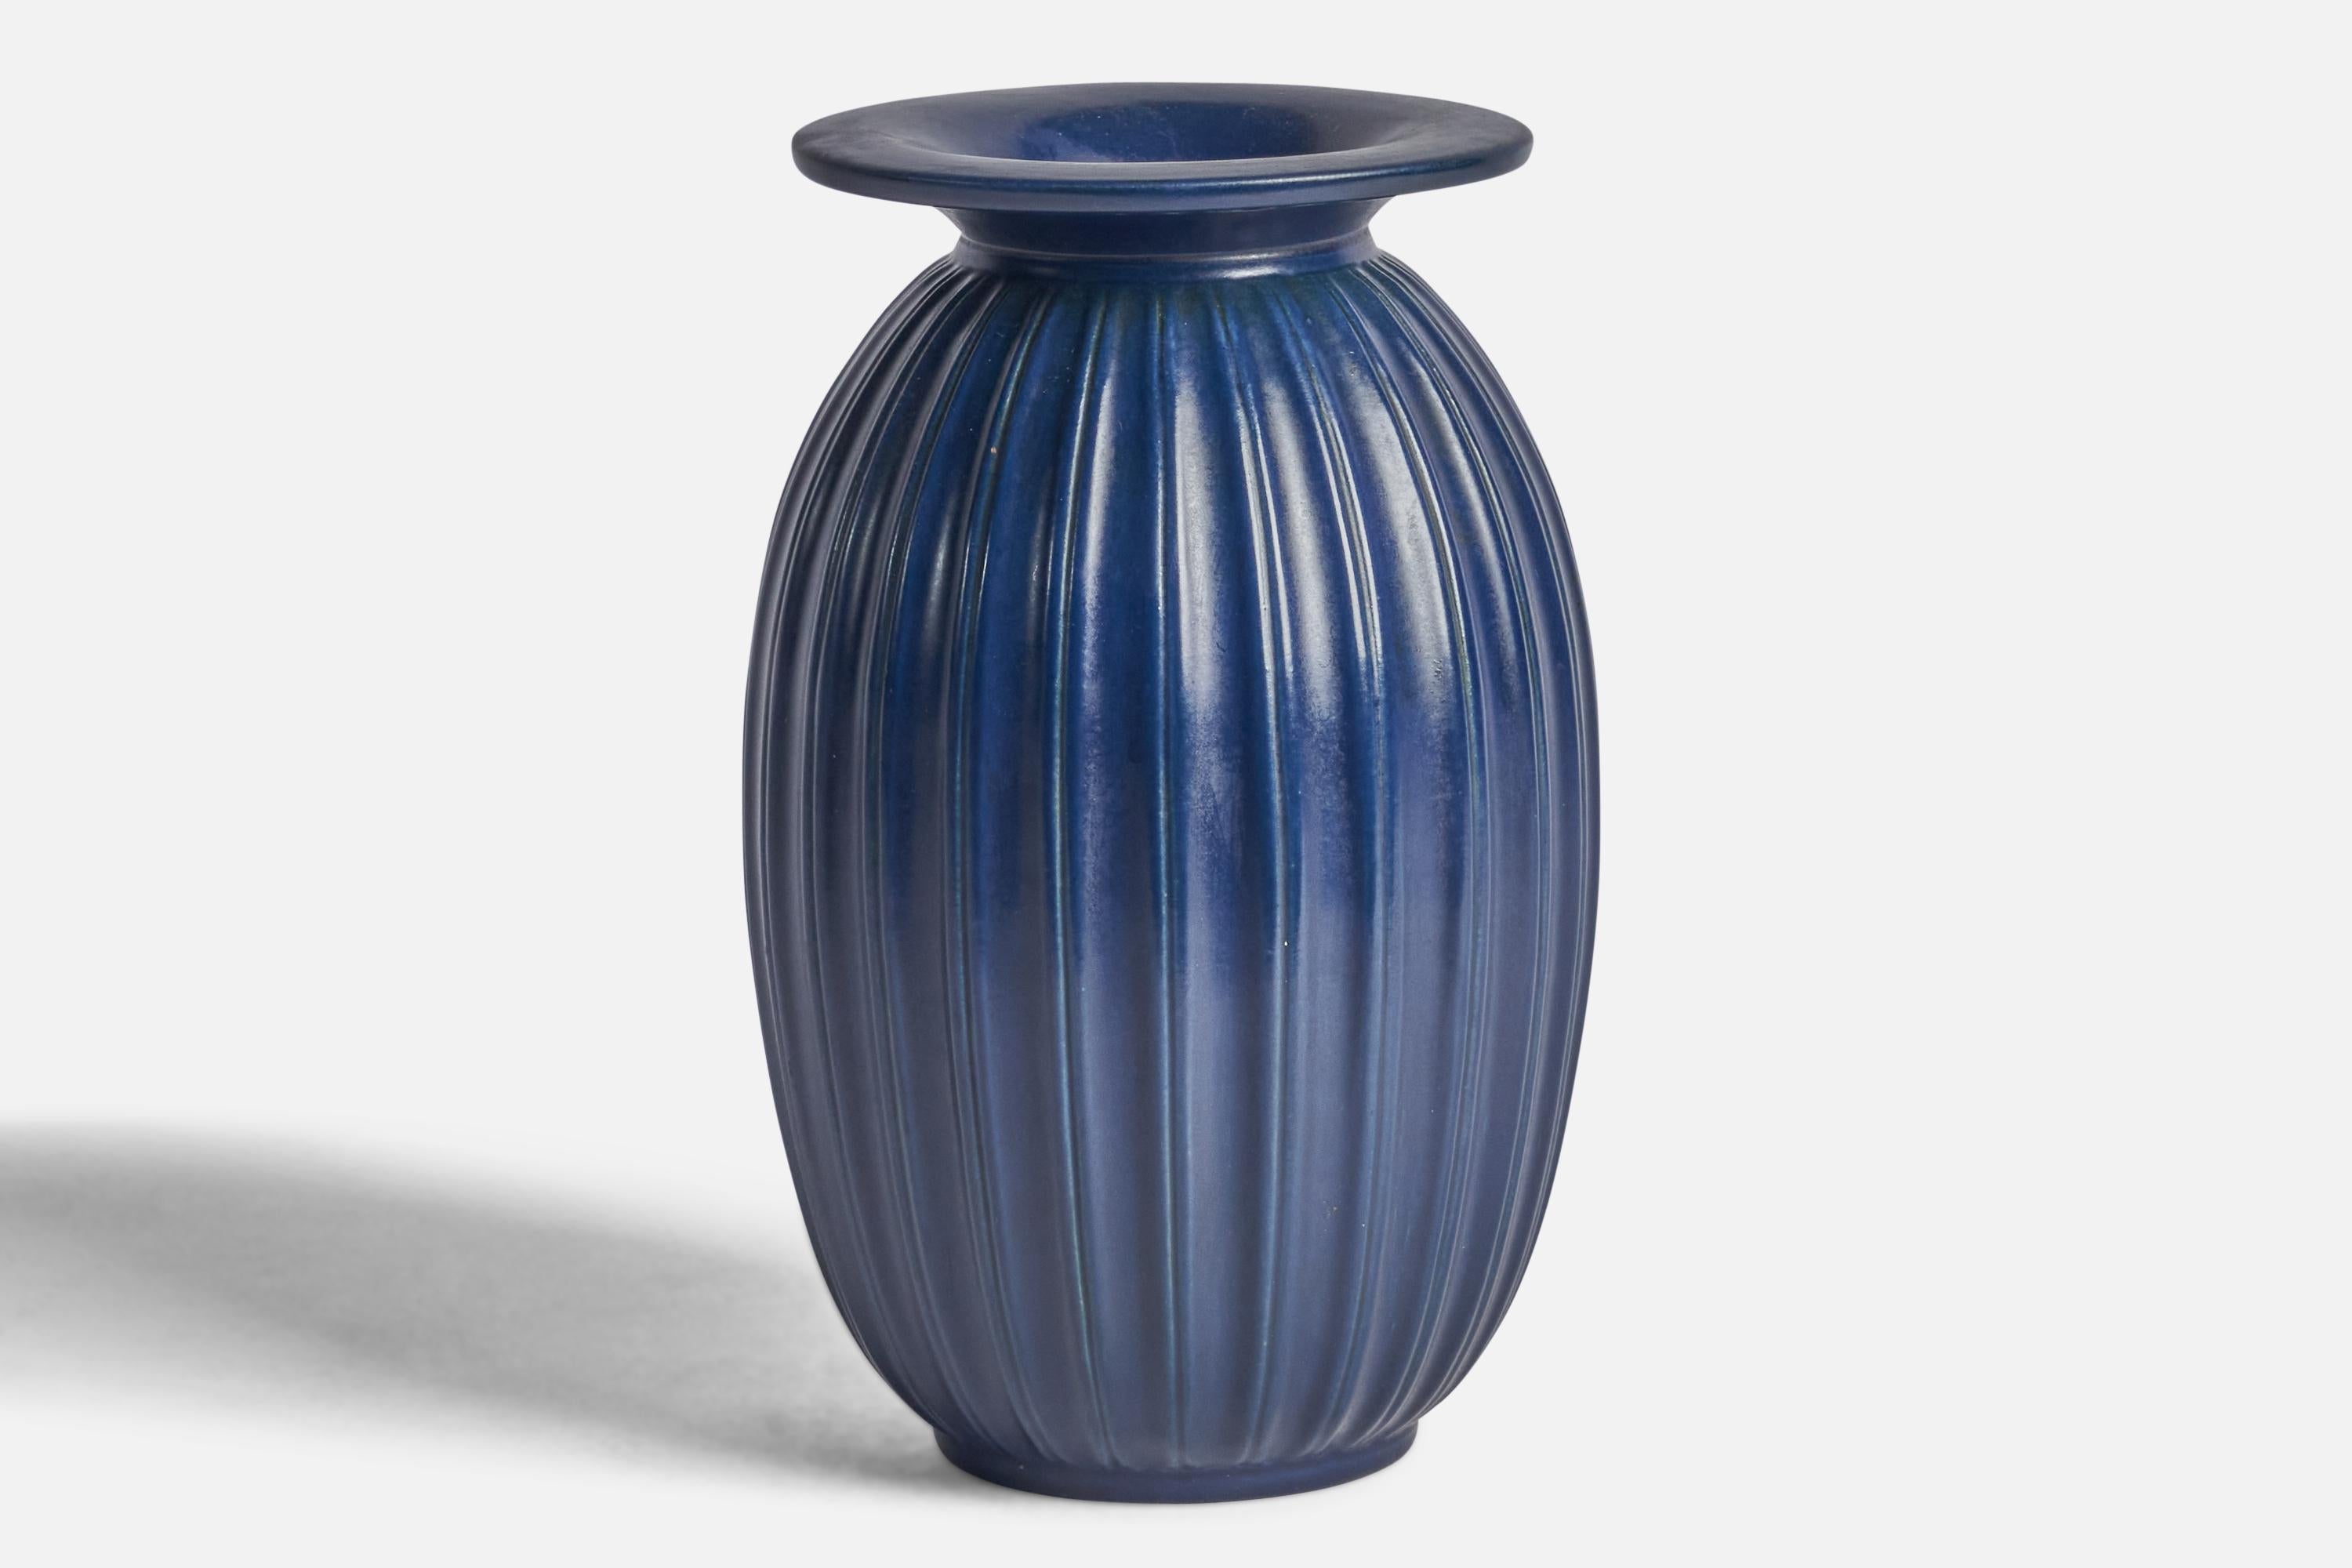 A blue-glazed fluted stoneware vase designed and produced by Peter Ipsens Enke, Denmark, 1940s.